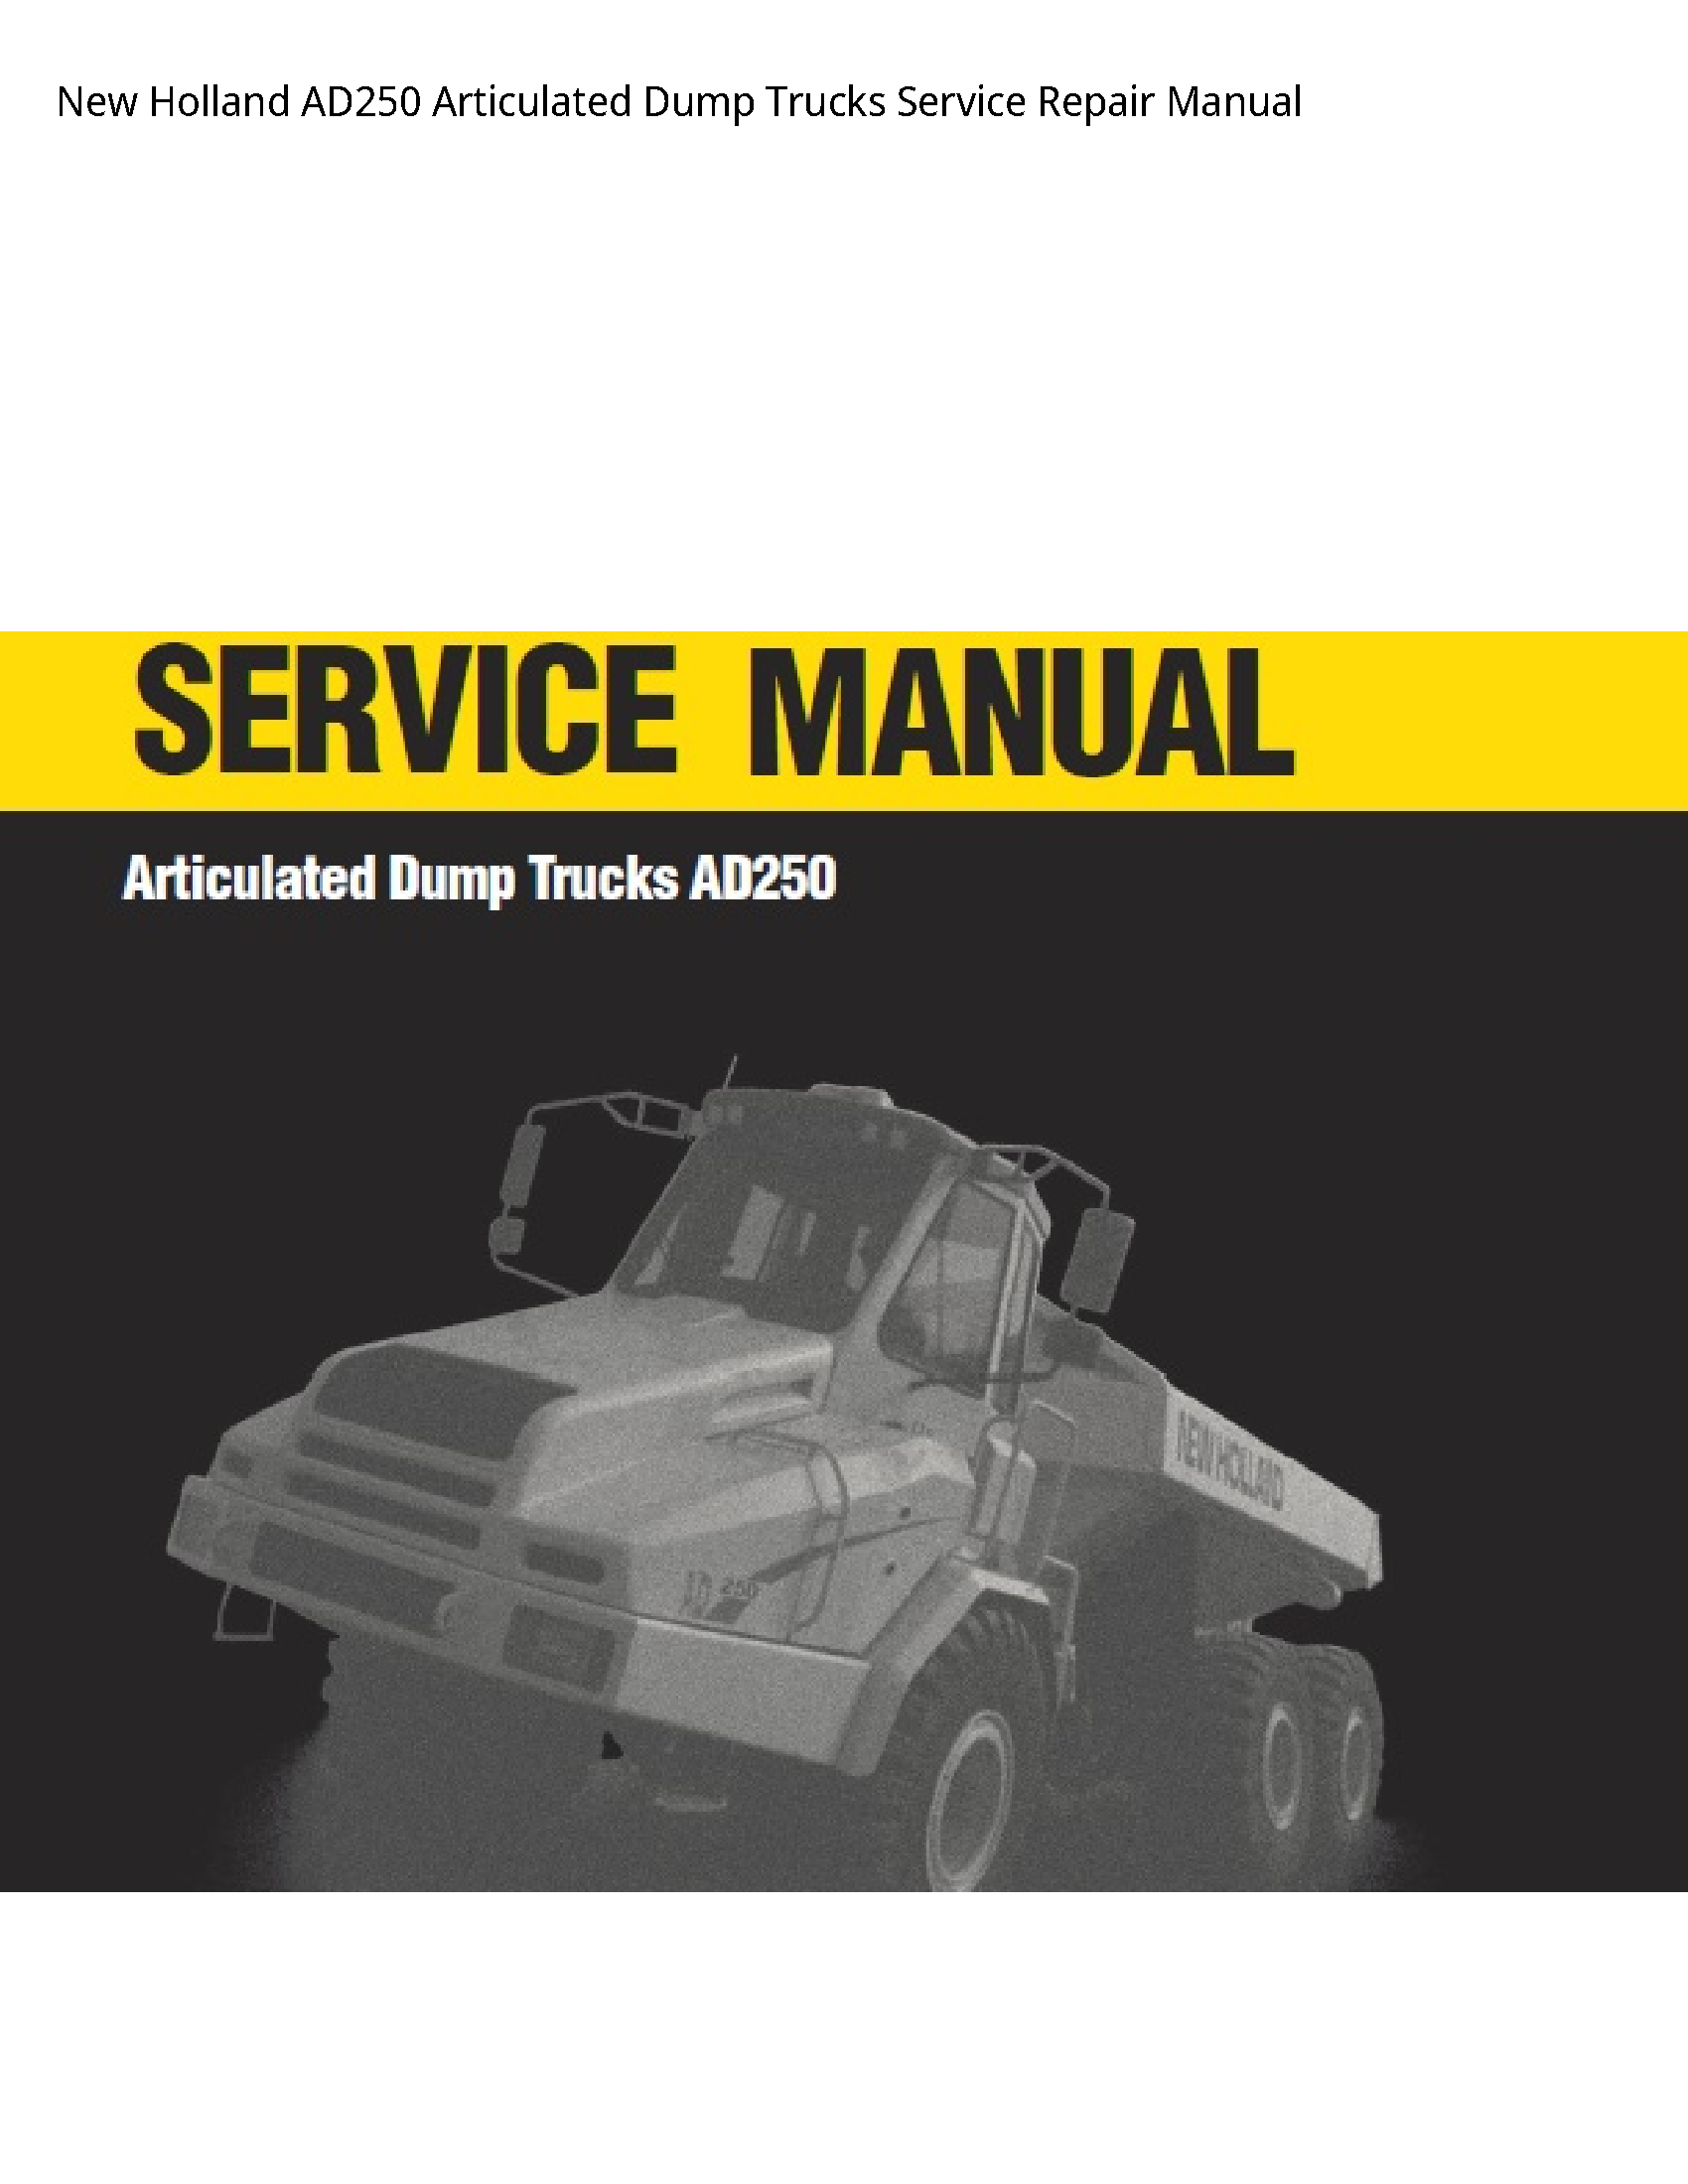 New Holland AD250 Articulated Dump Trucks manual